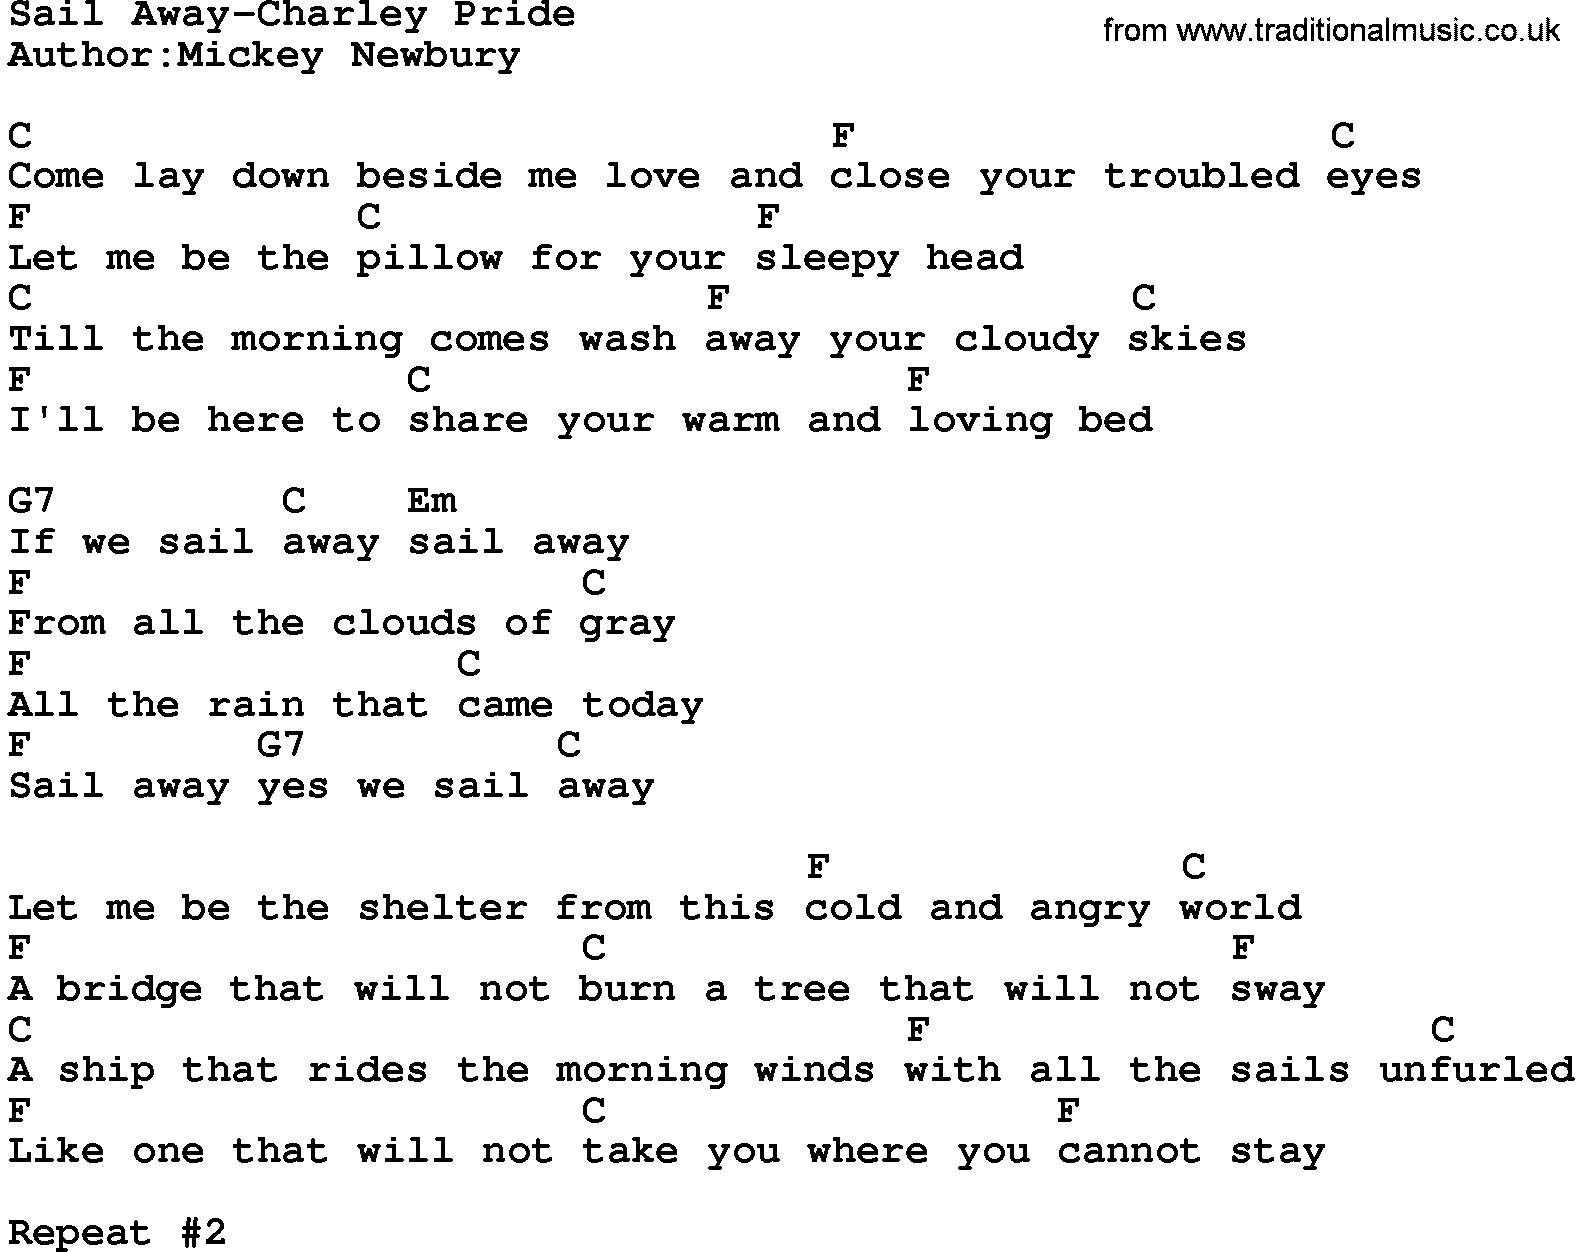 Country music song: Sail Away-Charley Pride lyrics and chords.